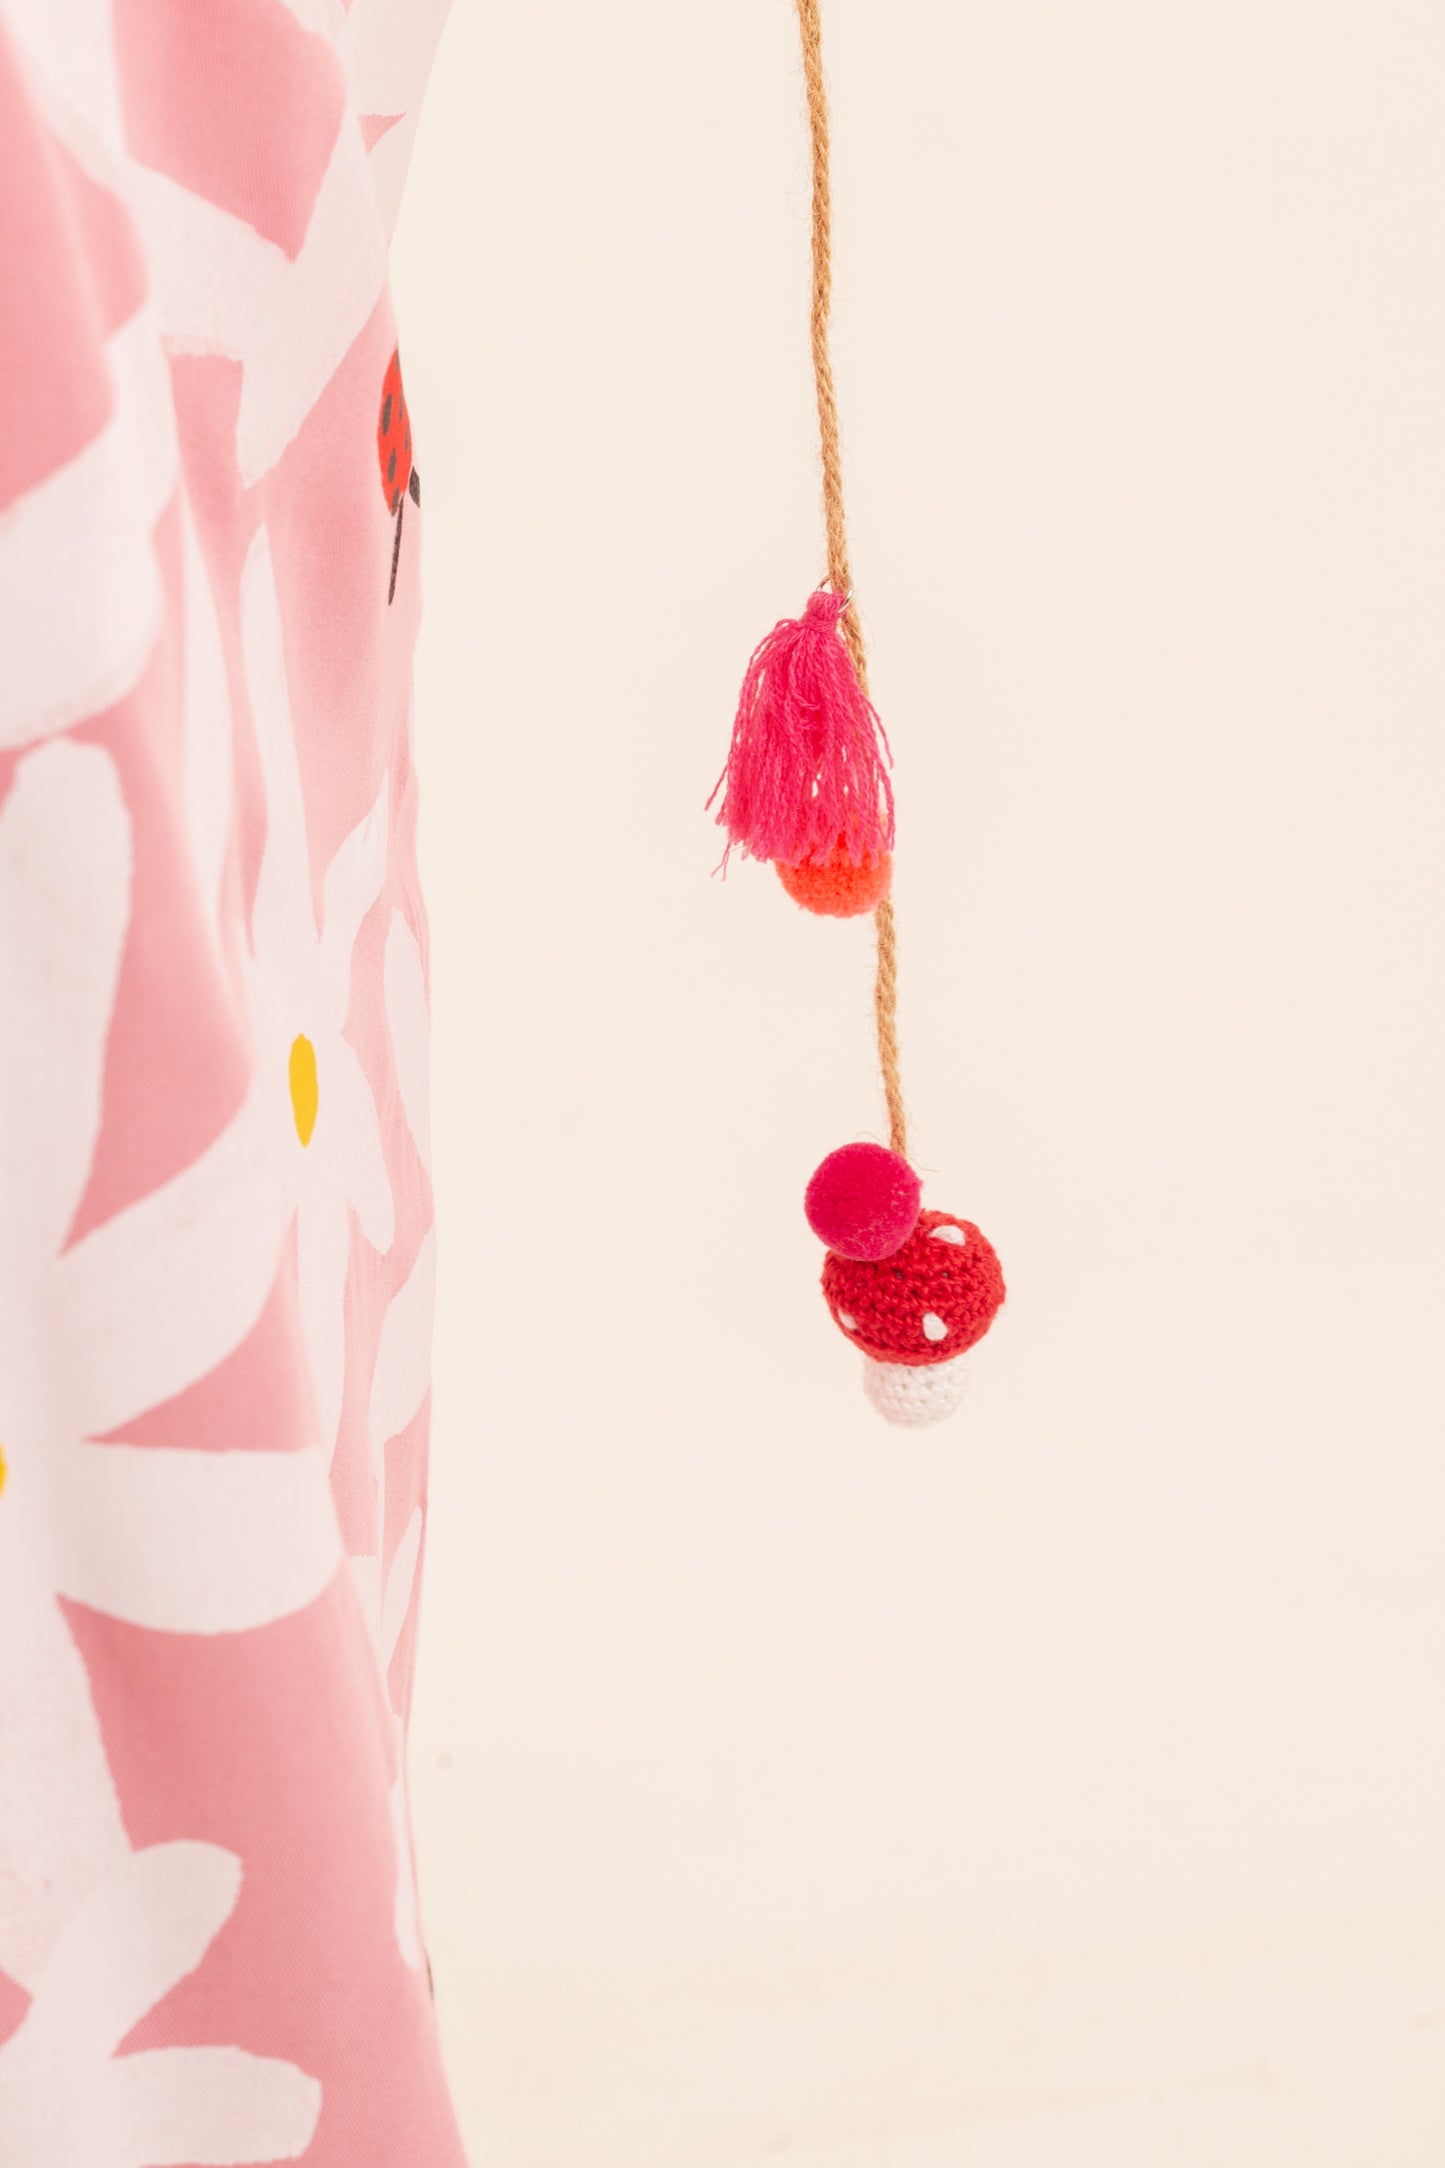 Vestido Pompom - rosa